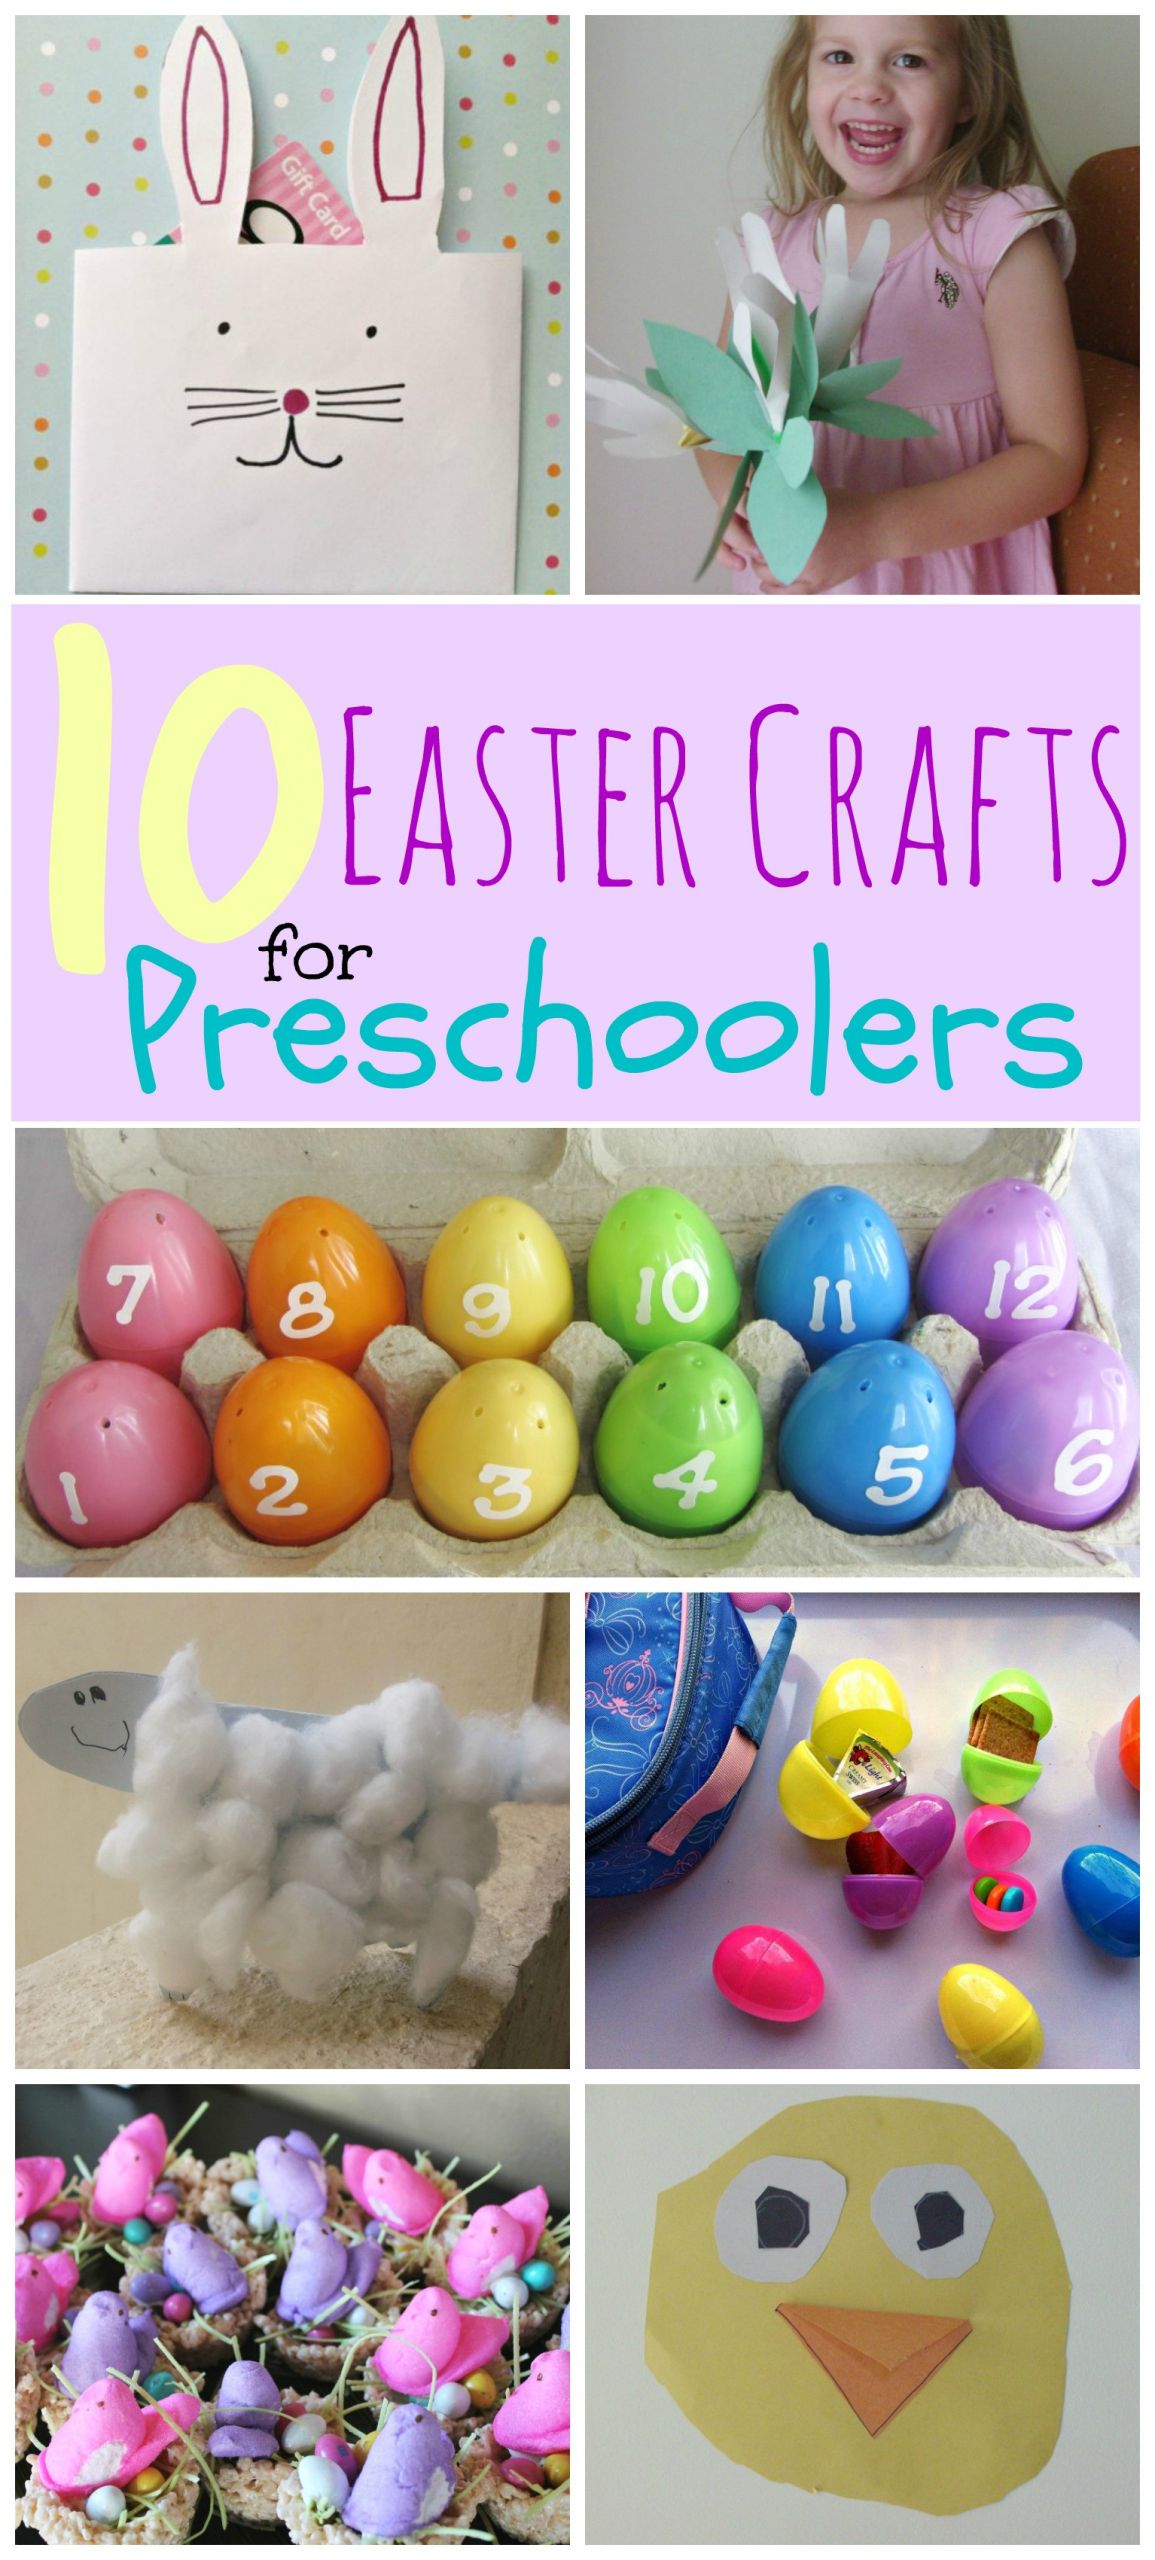 Easter Crafts Preschool
 10 Easter Crafts for Preschoolers